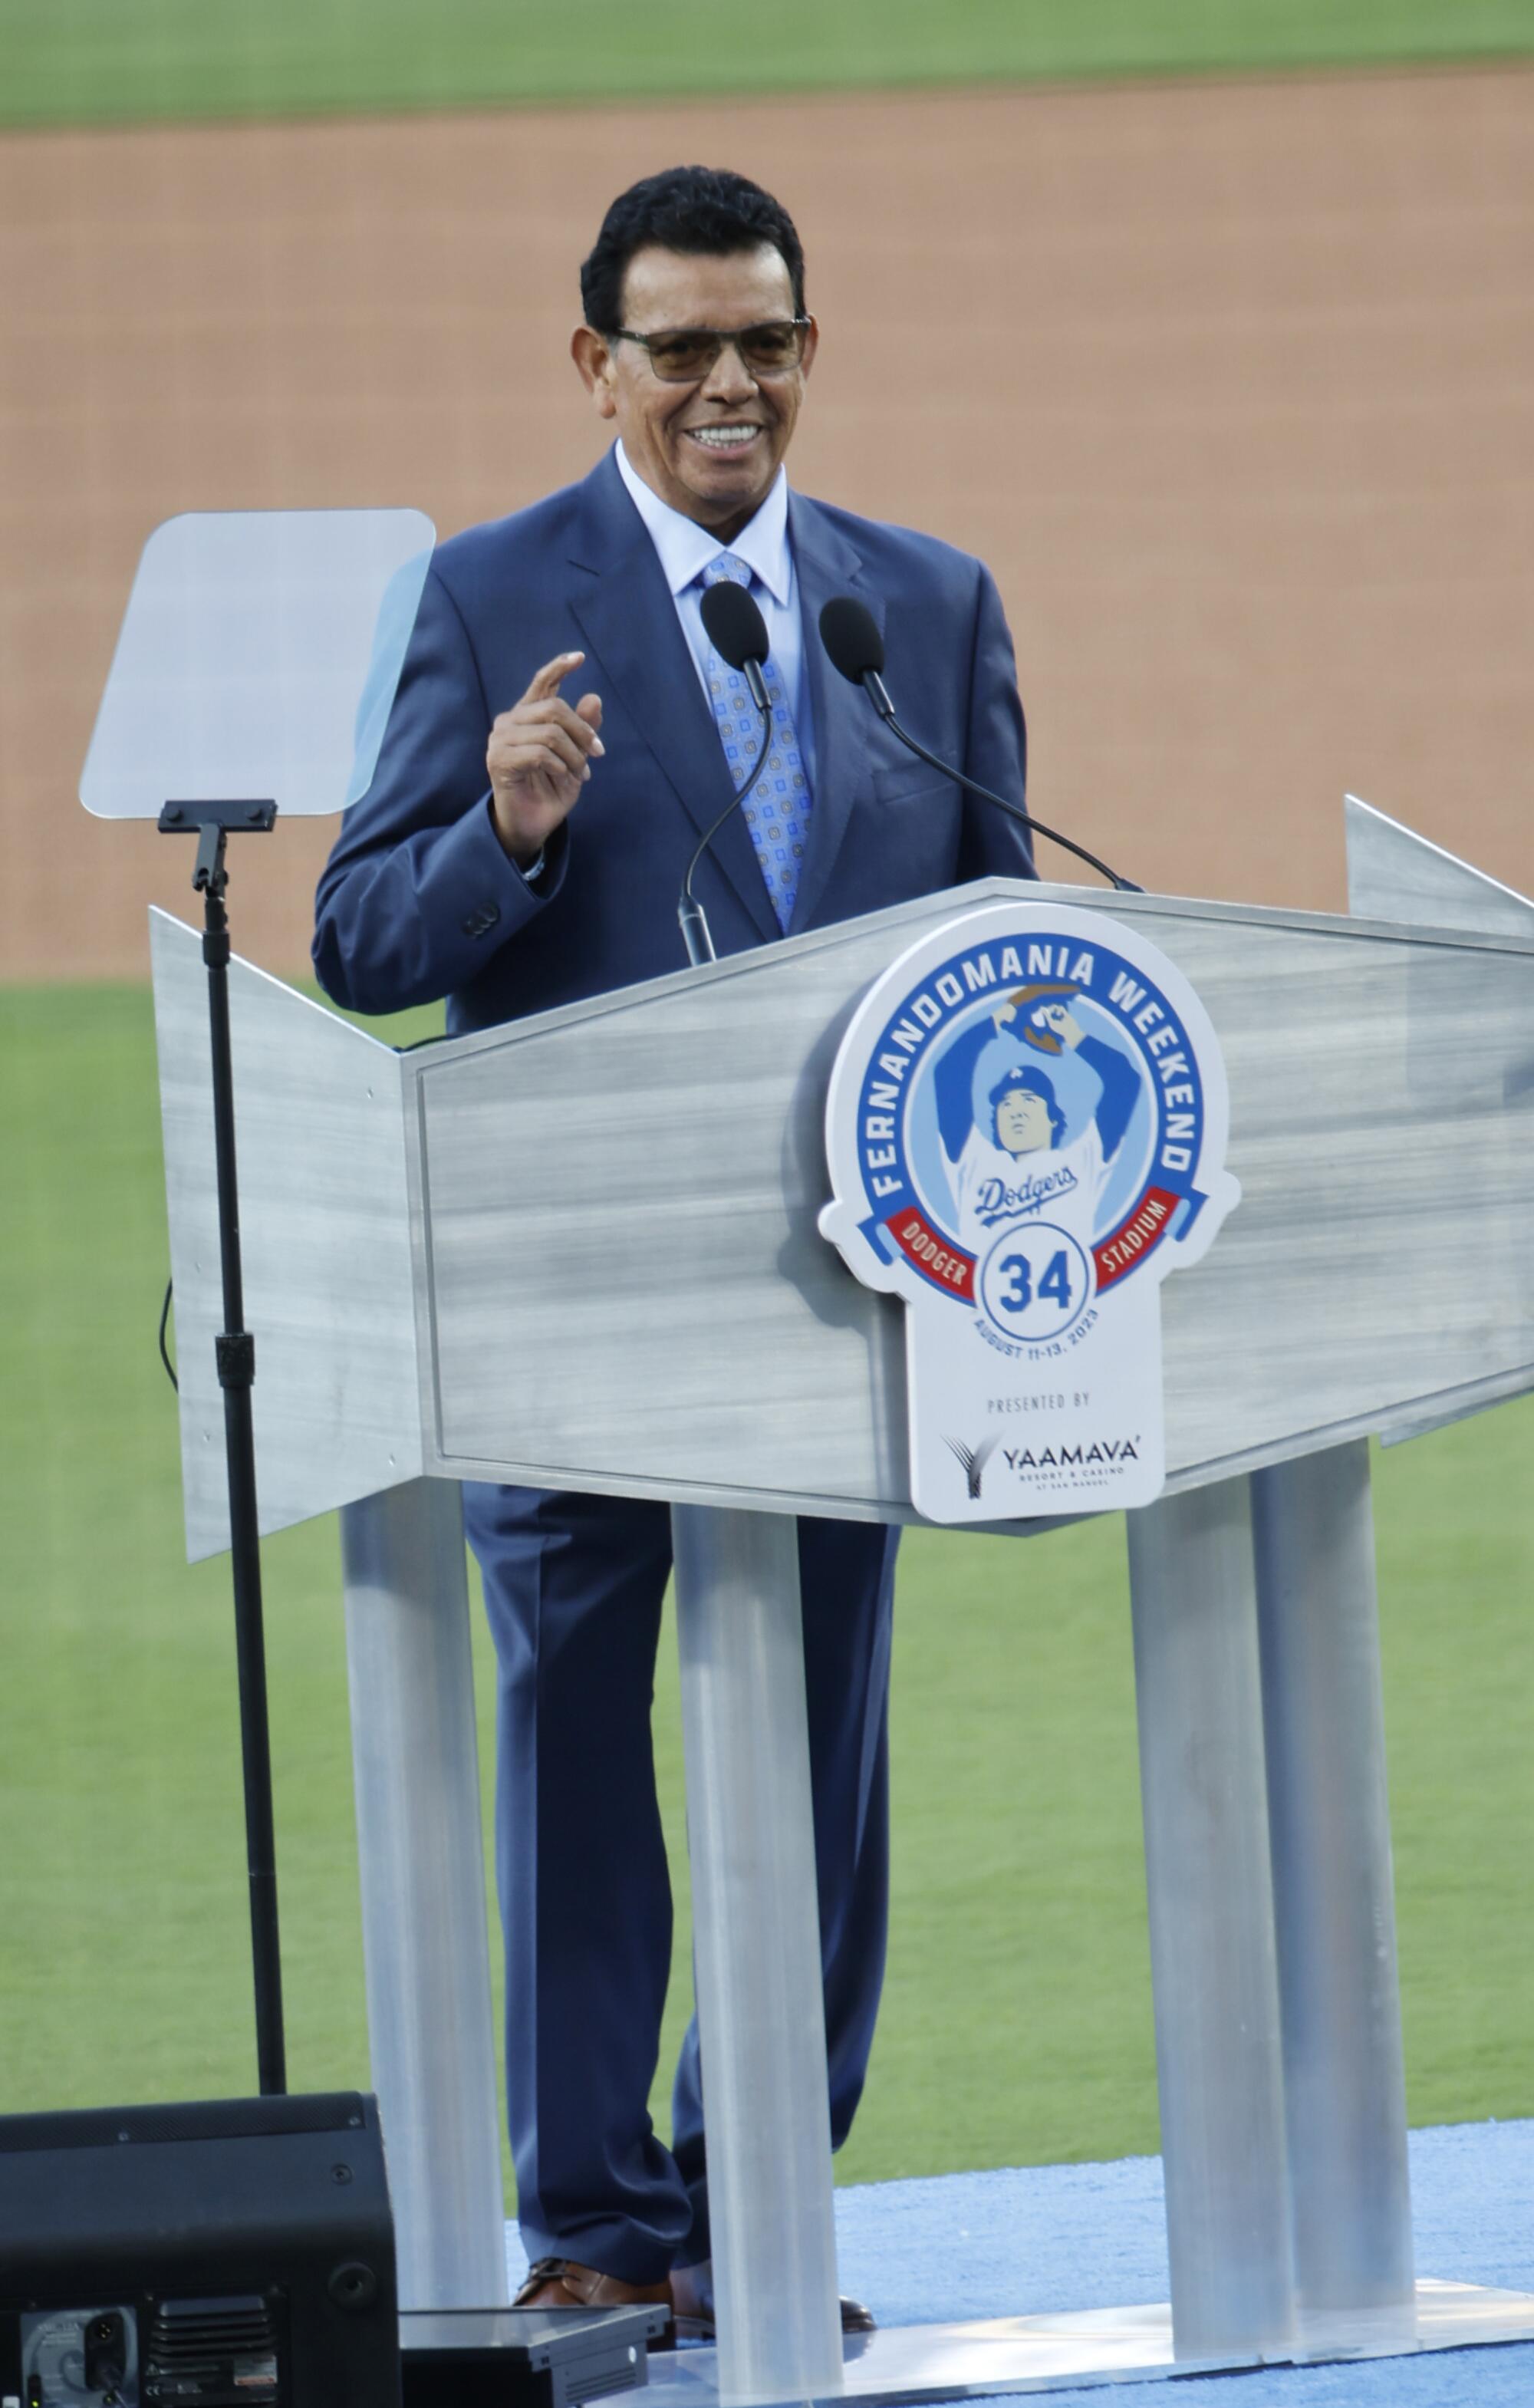 Dodgers legend Fernando Valenzuela addresses the crowd during his jersey retirement ceremony at Dodger Stadium.